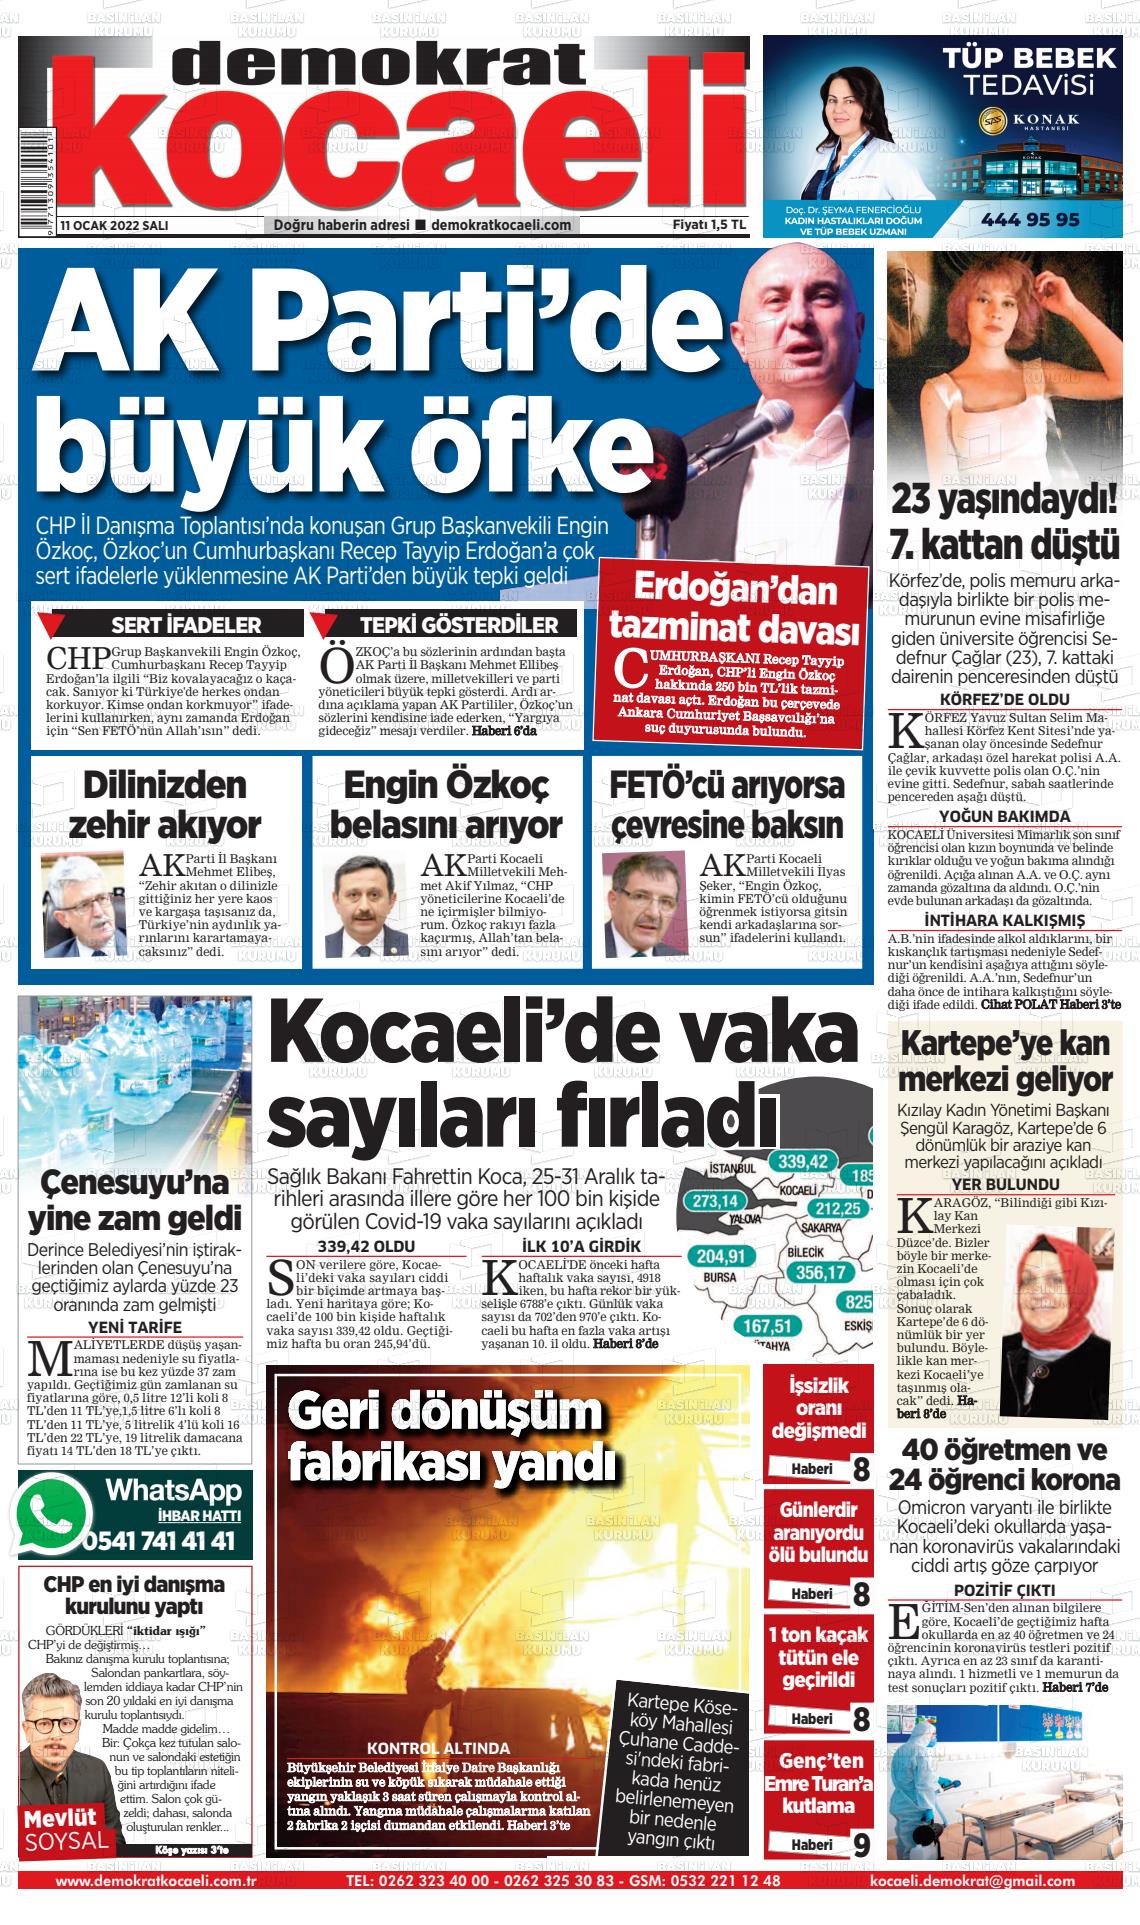 11 Ocak 2022 Demokrat Kocaeli Gazete Manşeti